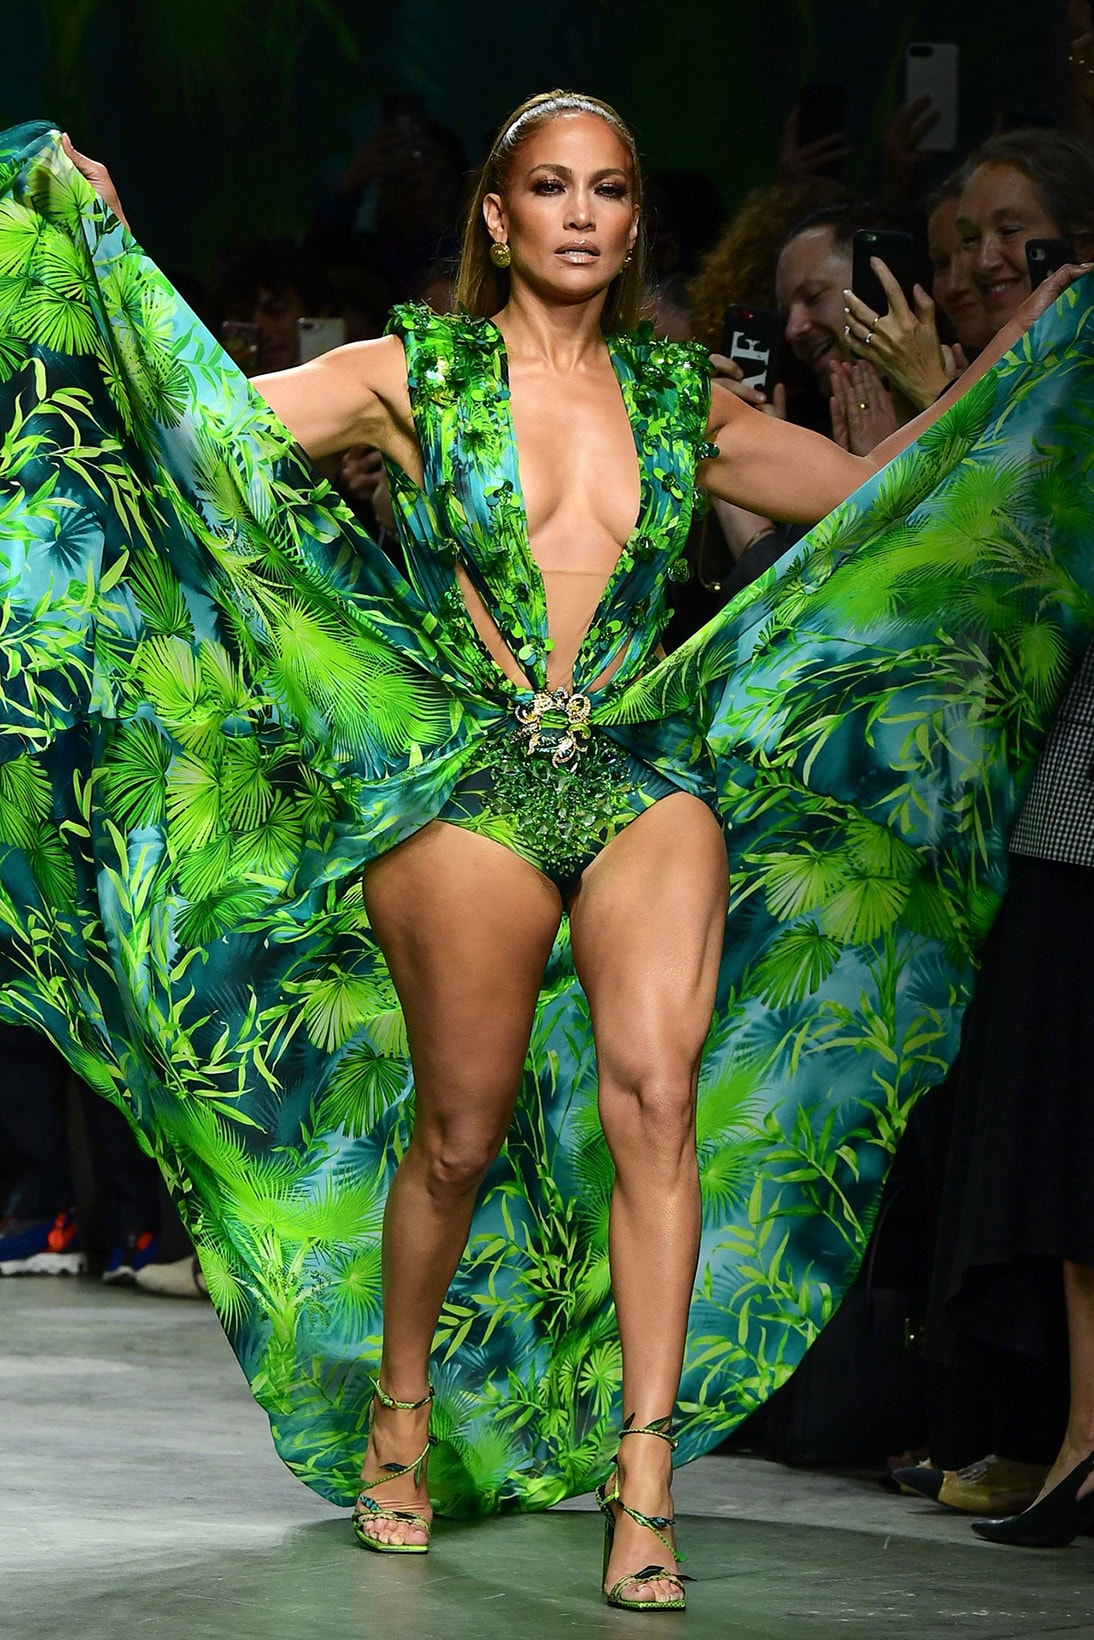 versace fashion nova sue lawsuit jennifer lopez grammys green blue dress trademark